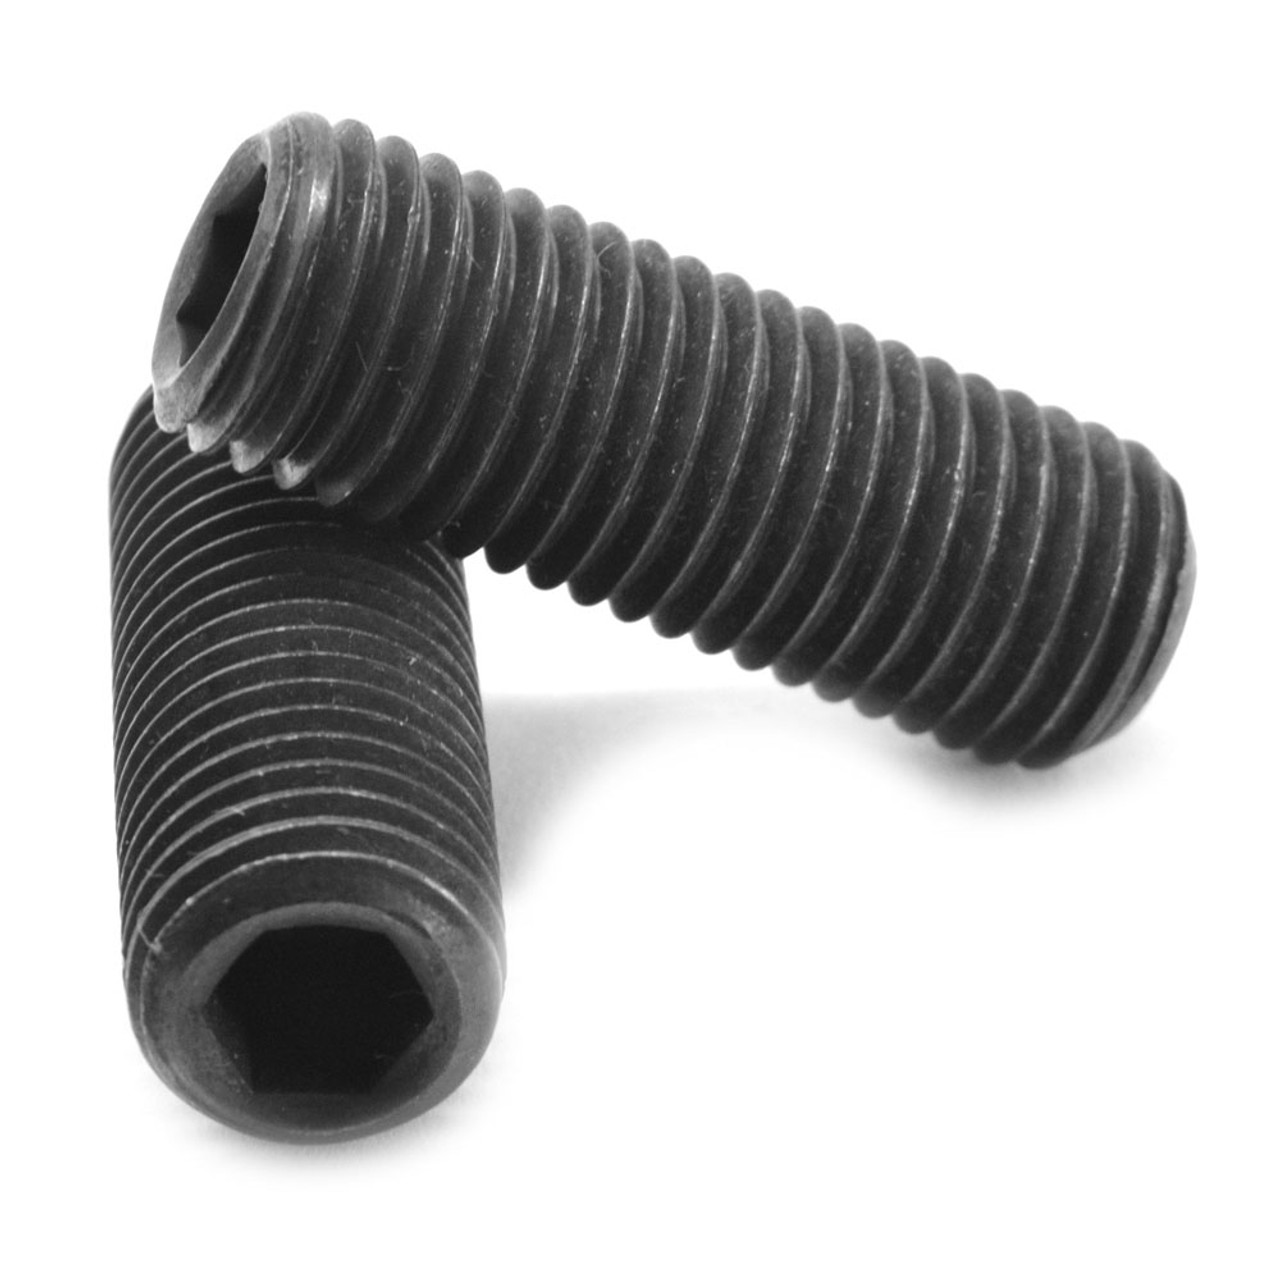 M24 x 3.00 x 80 MM Coarse Thread ISO 4029 / DIN 916 Class 45H Socket Set Screw Cup Point Alloy Steel Black Oxide